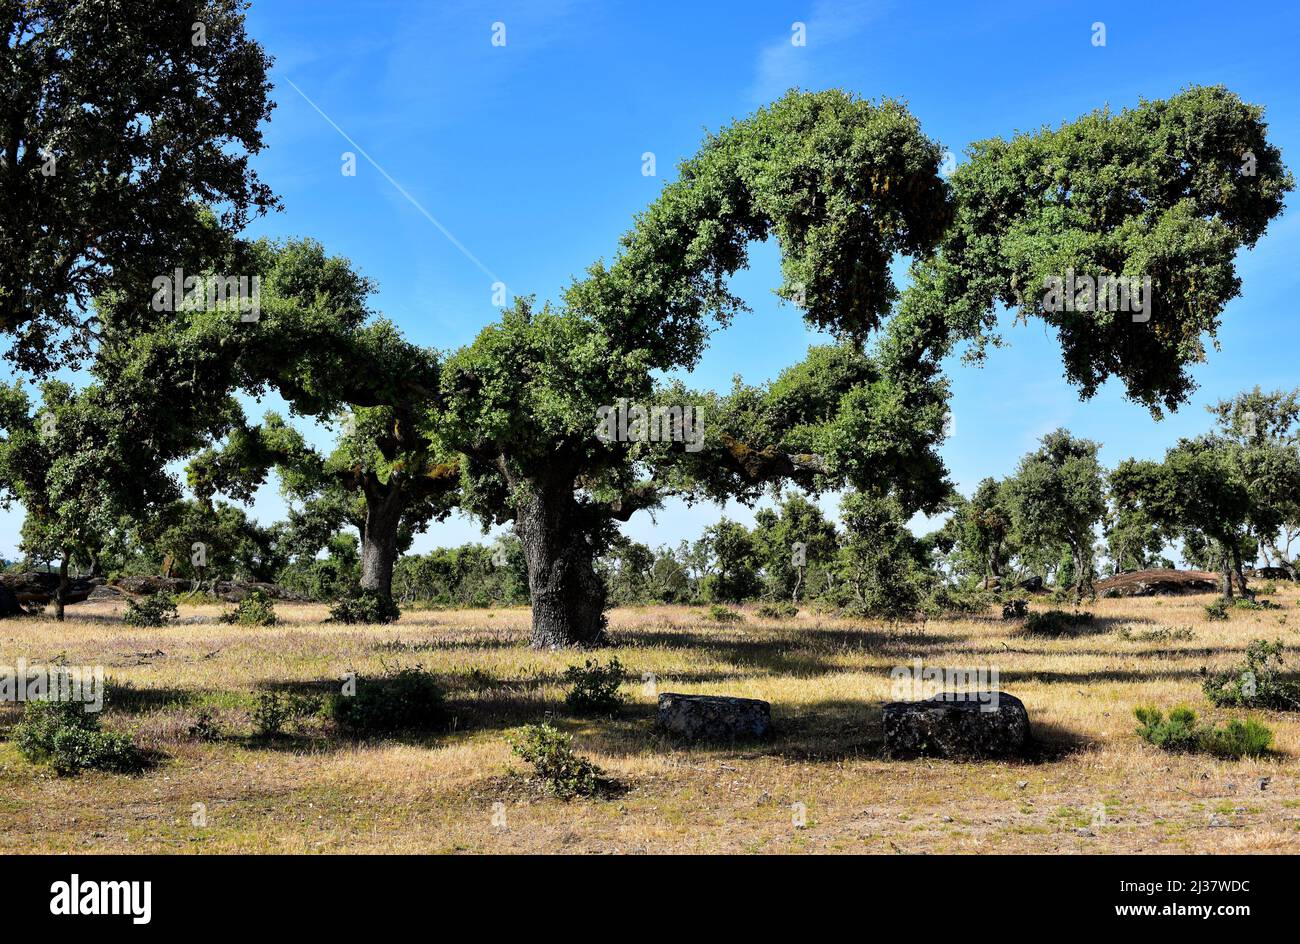 Evergreen oak (Quercus ilex ballota or Quercus ilex rotundifolia) is an evergreen tree native to Mediterranean basin (Iberian Peninsula and Stock Photo